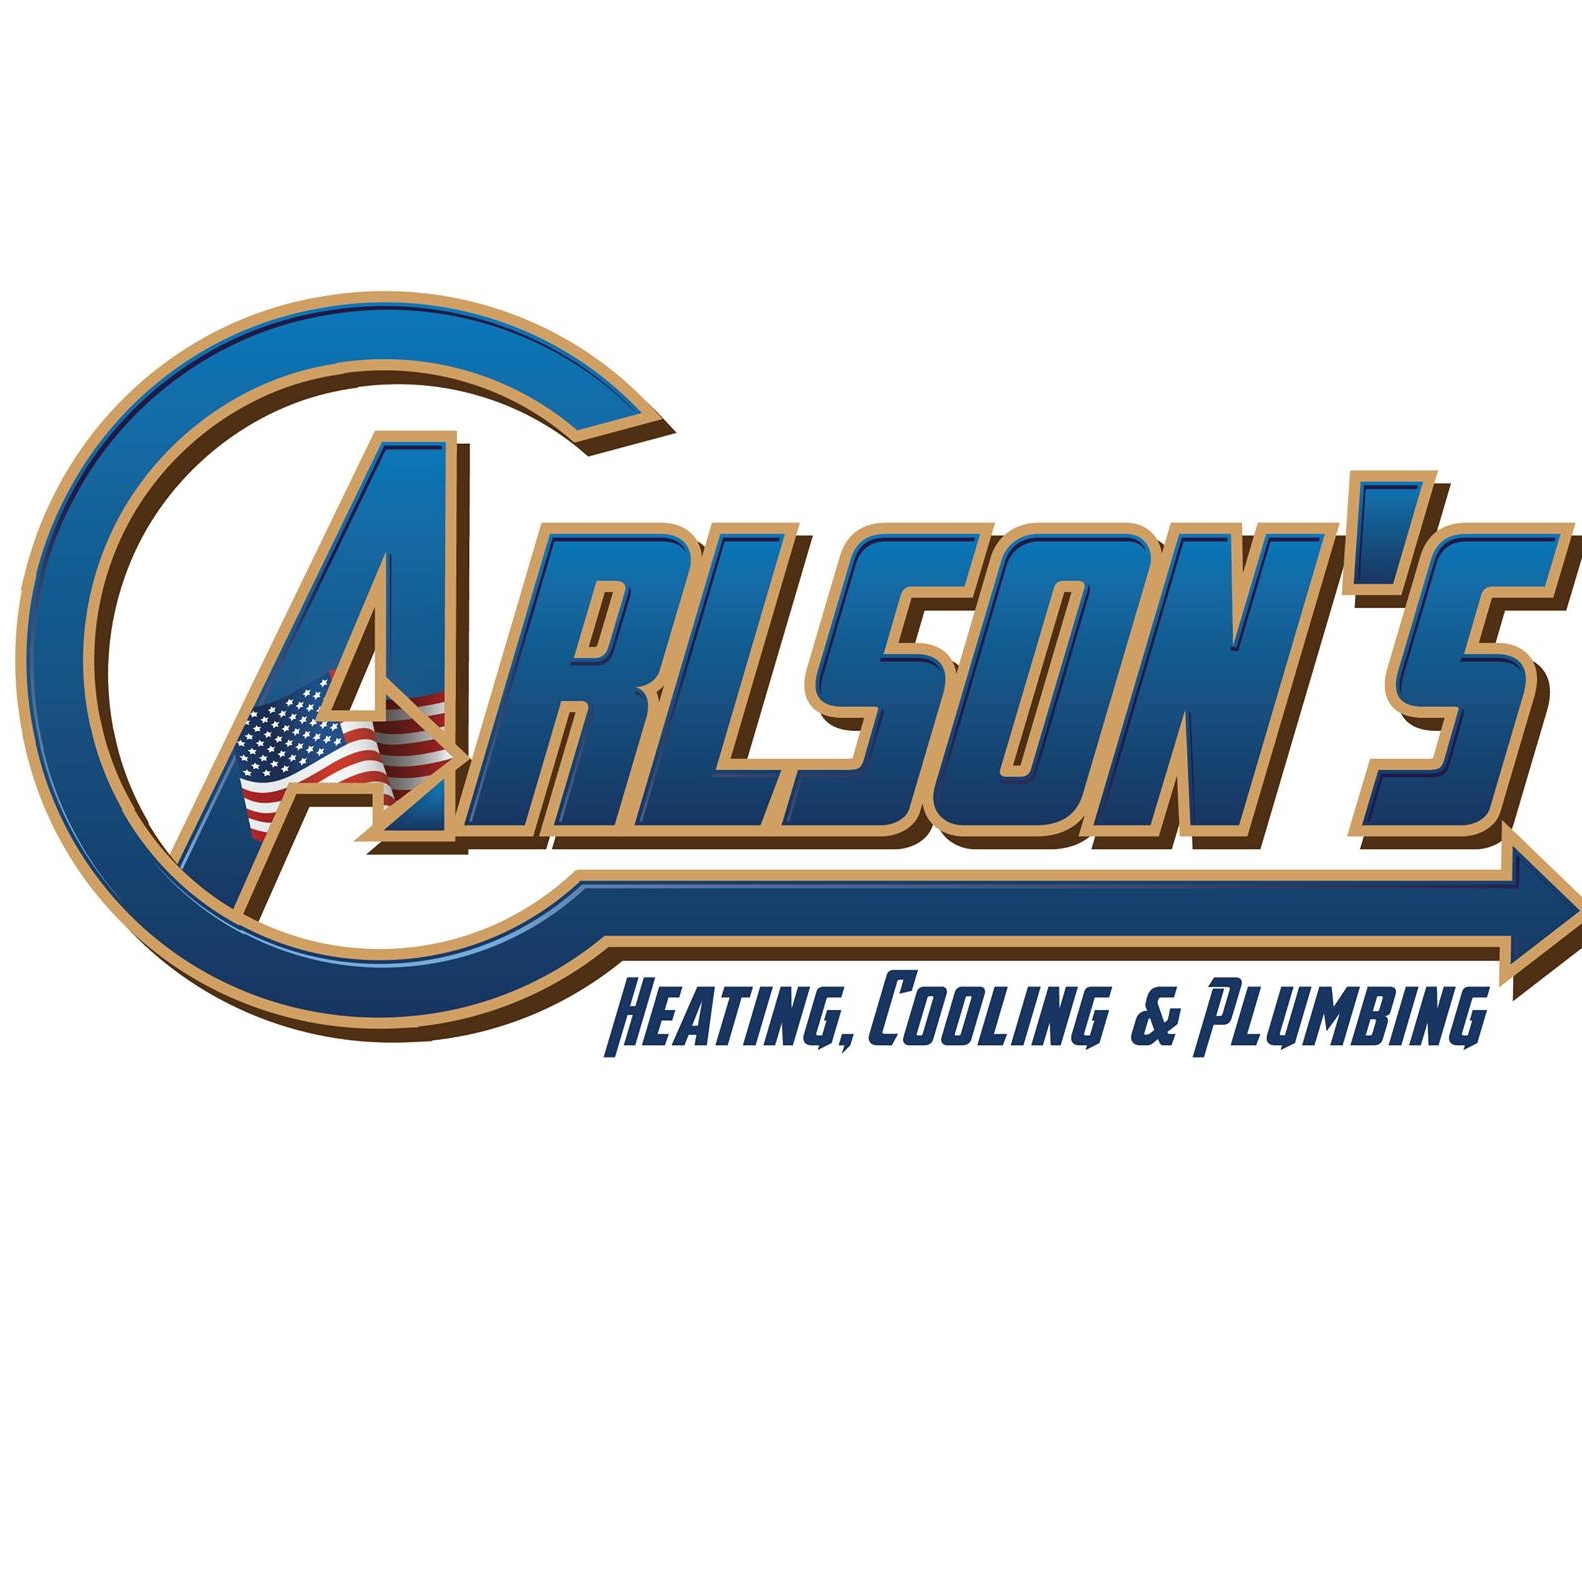 Carlsons Heating, Cooling & Plumbing